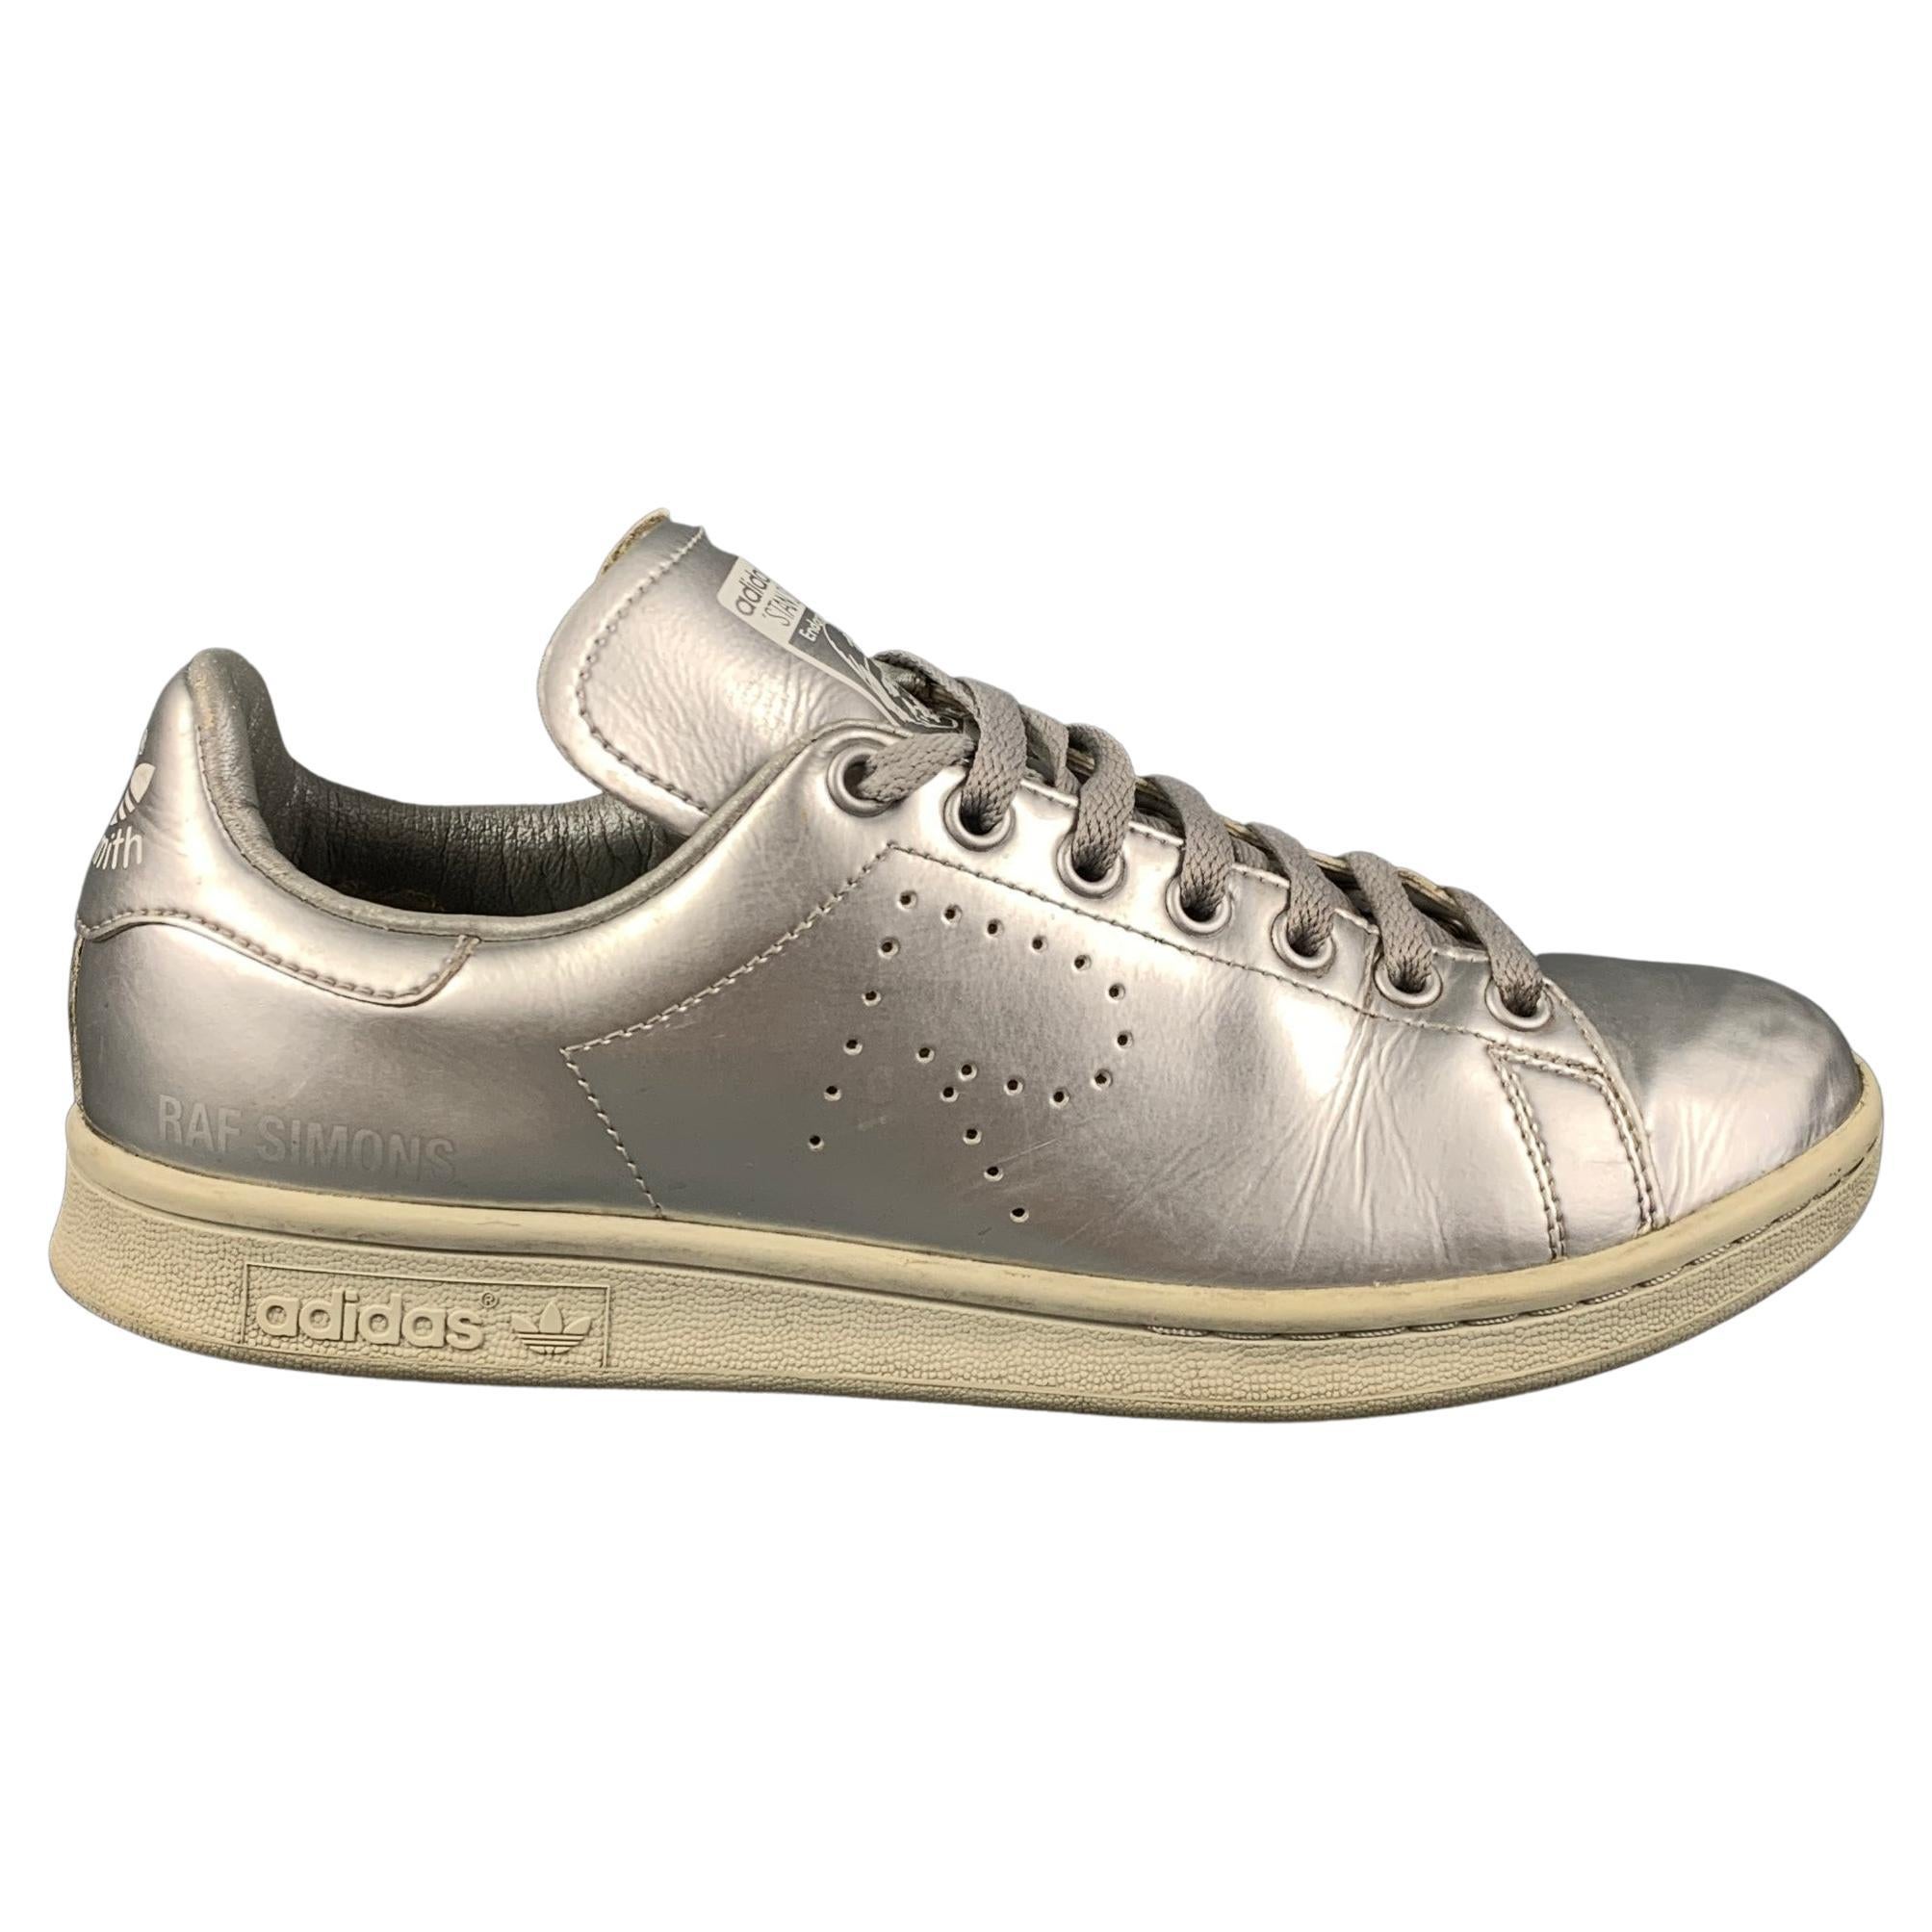 ADIDAS x RAF SIMONS Size 8.5 Silver Metallic Leather Low Top Sneakers